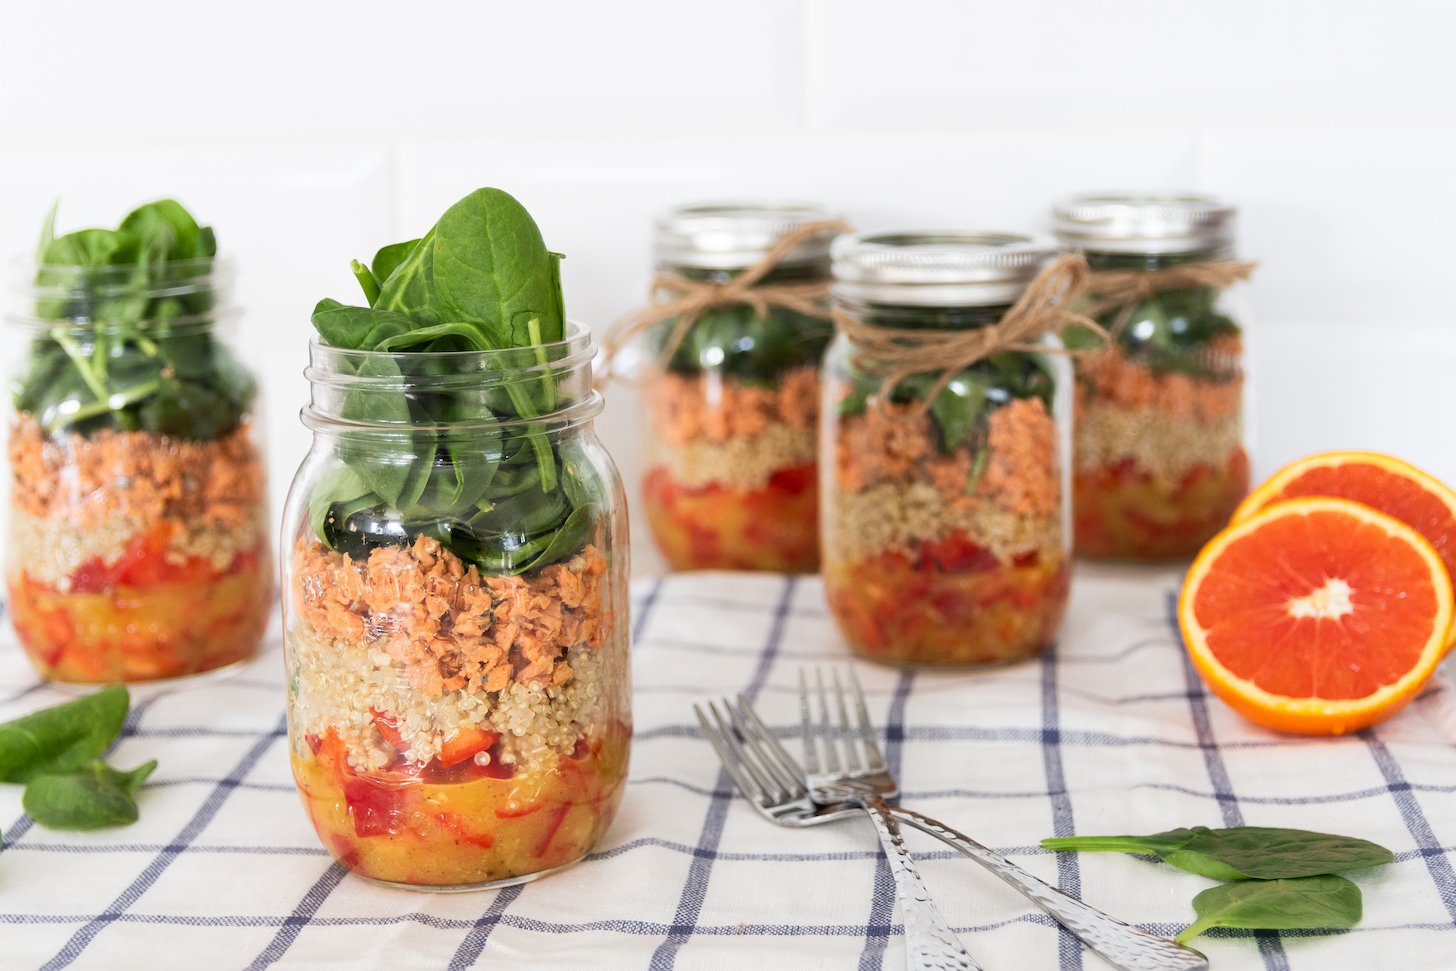 Vibrant mason jar salads layered with veggies, salmon, and greens.